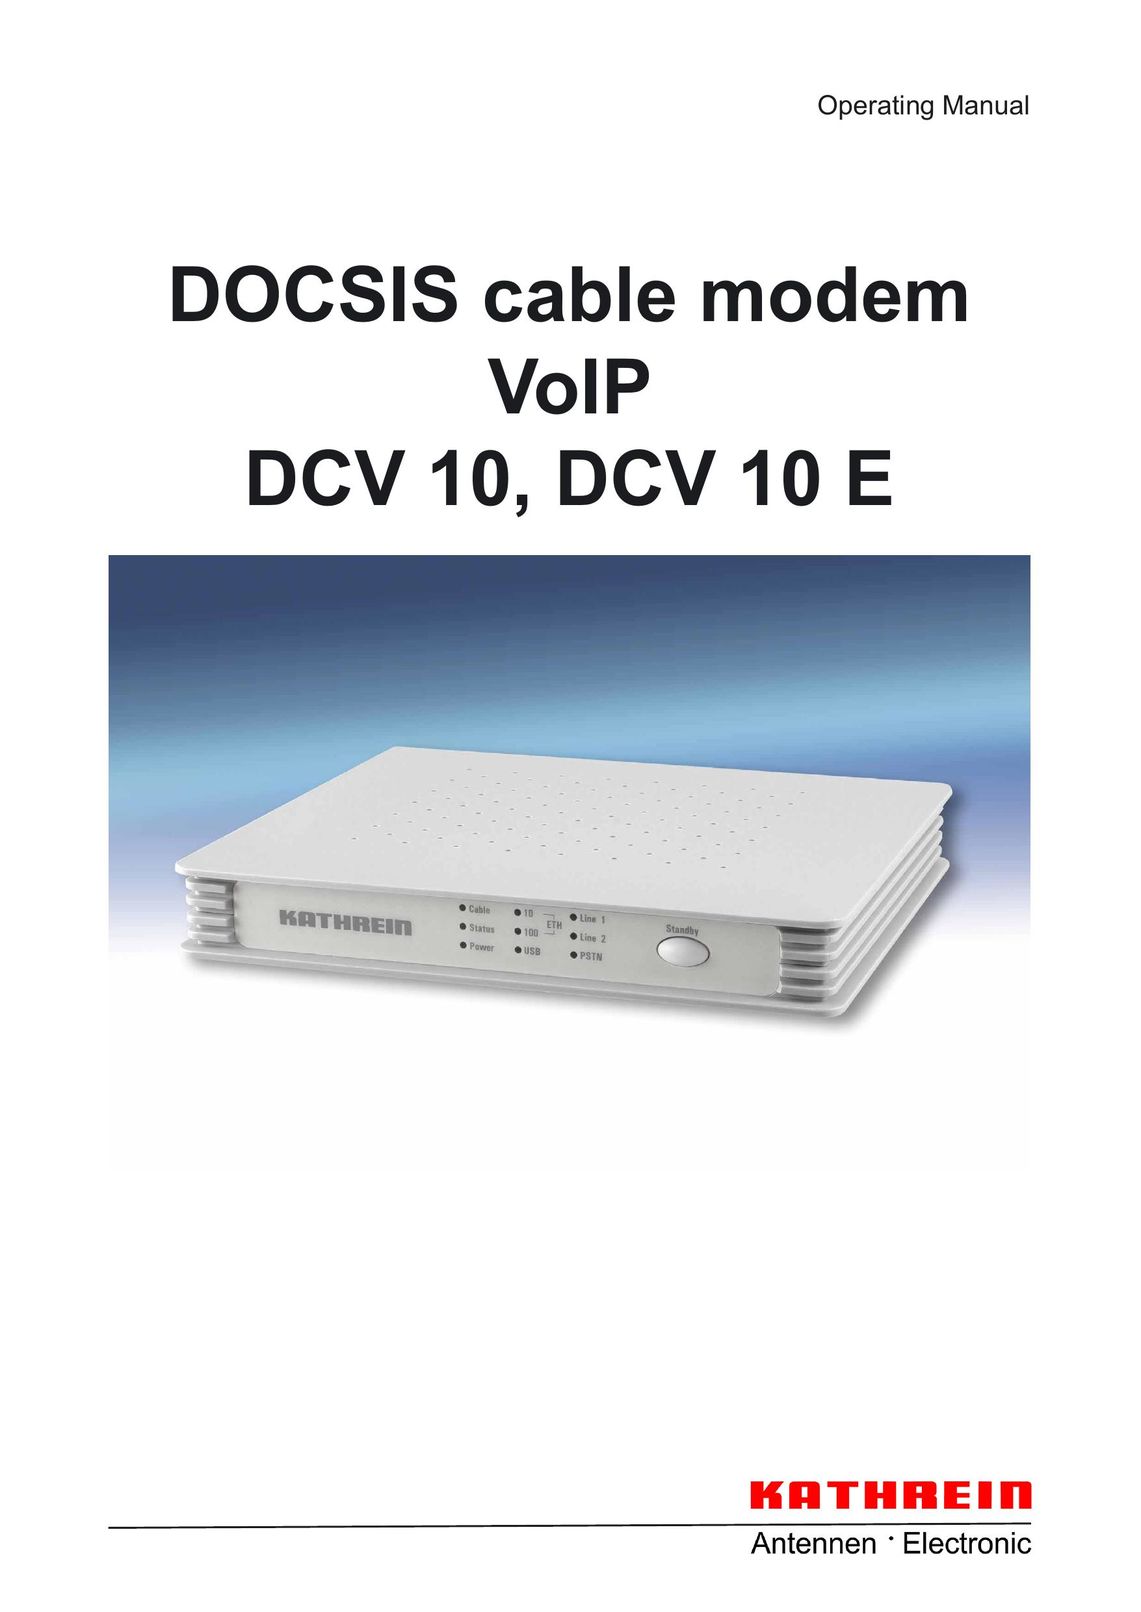 Kathrein DCV 10 E Modem User Manual